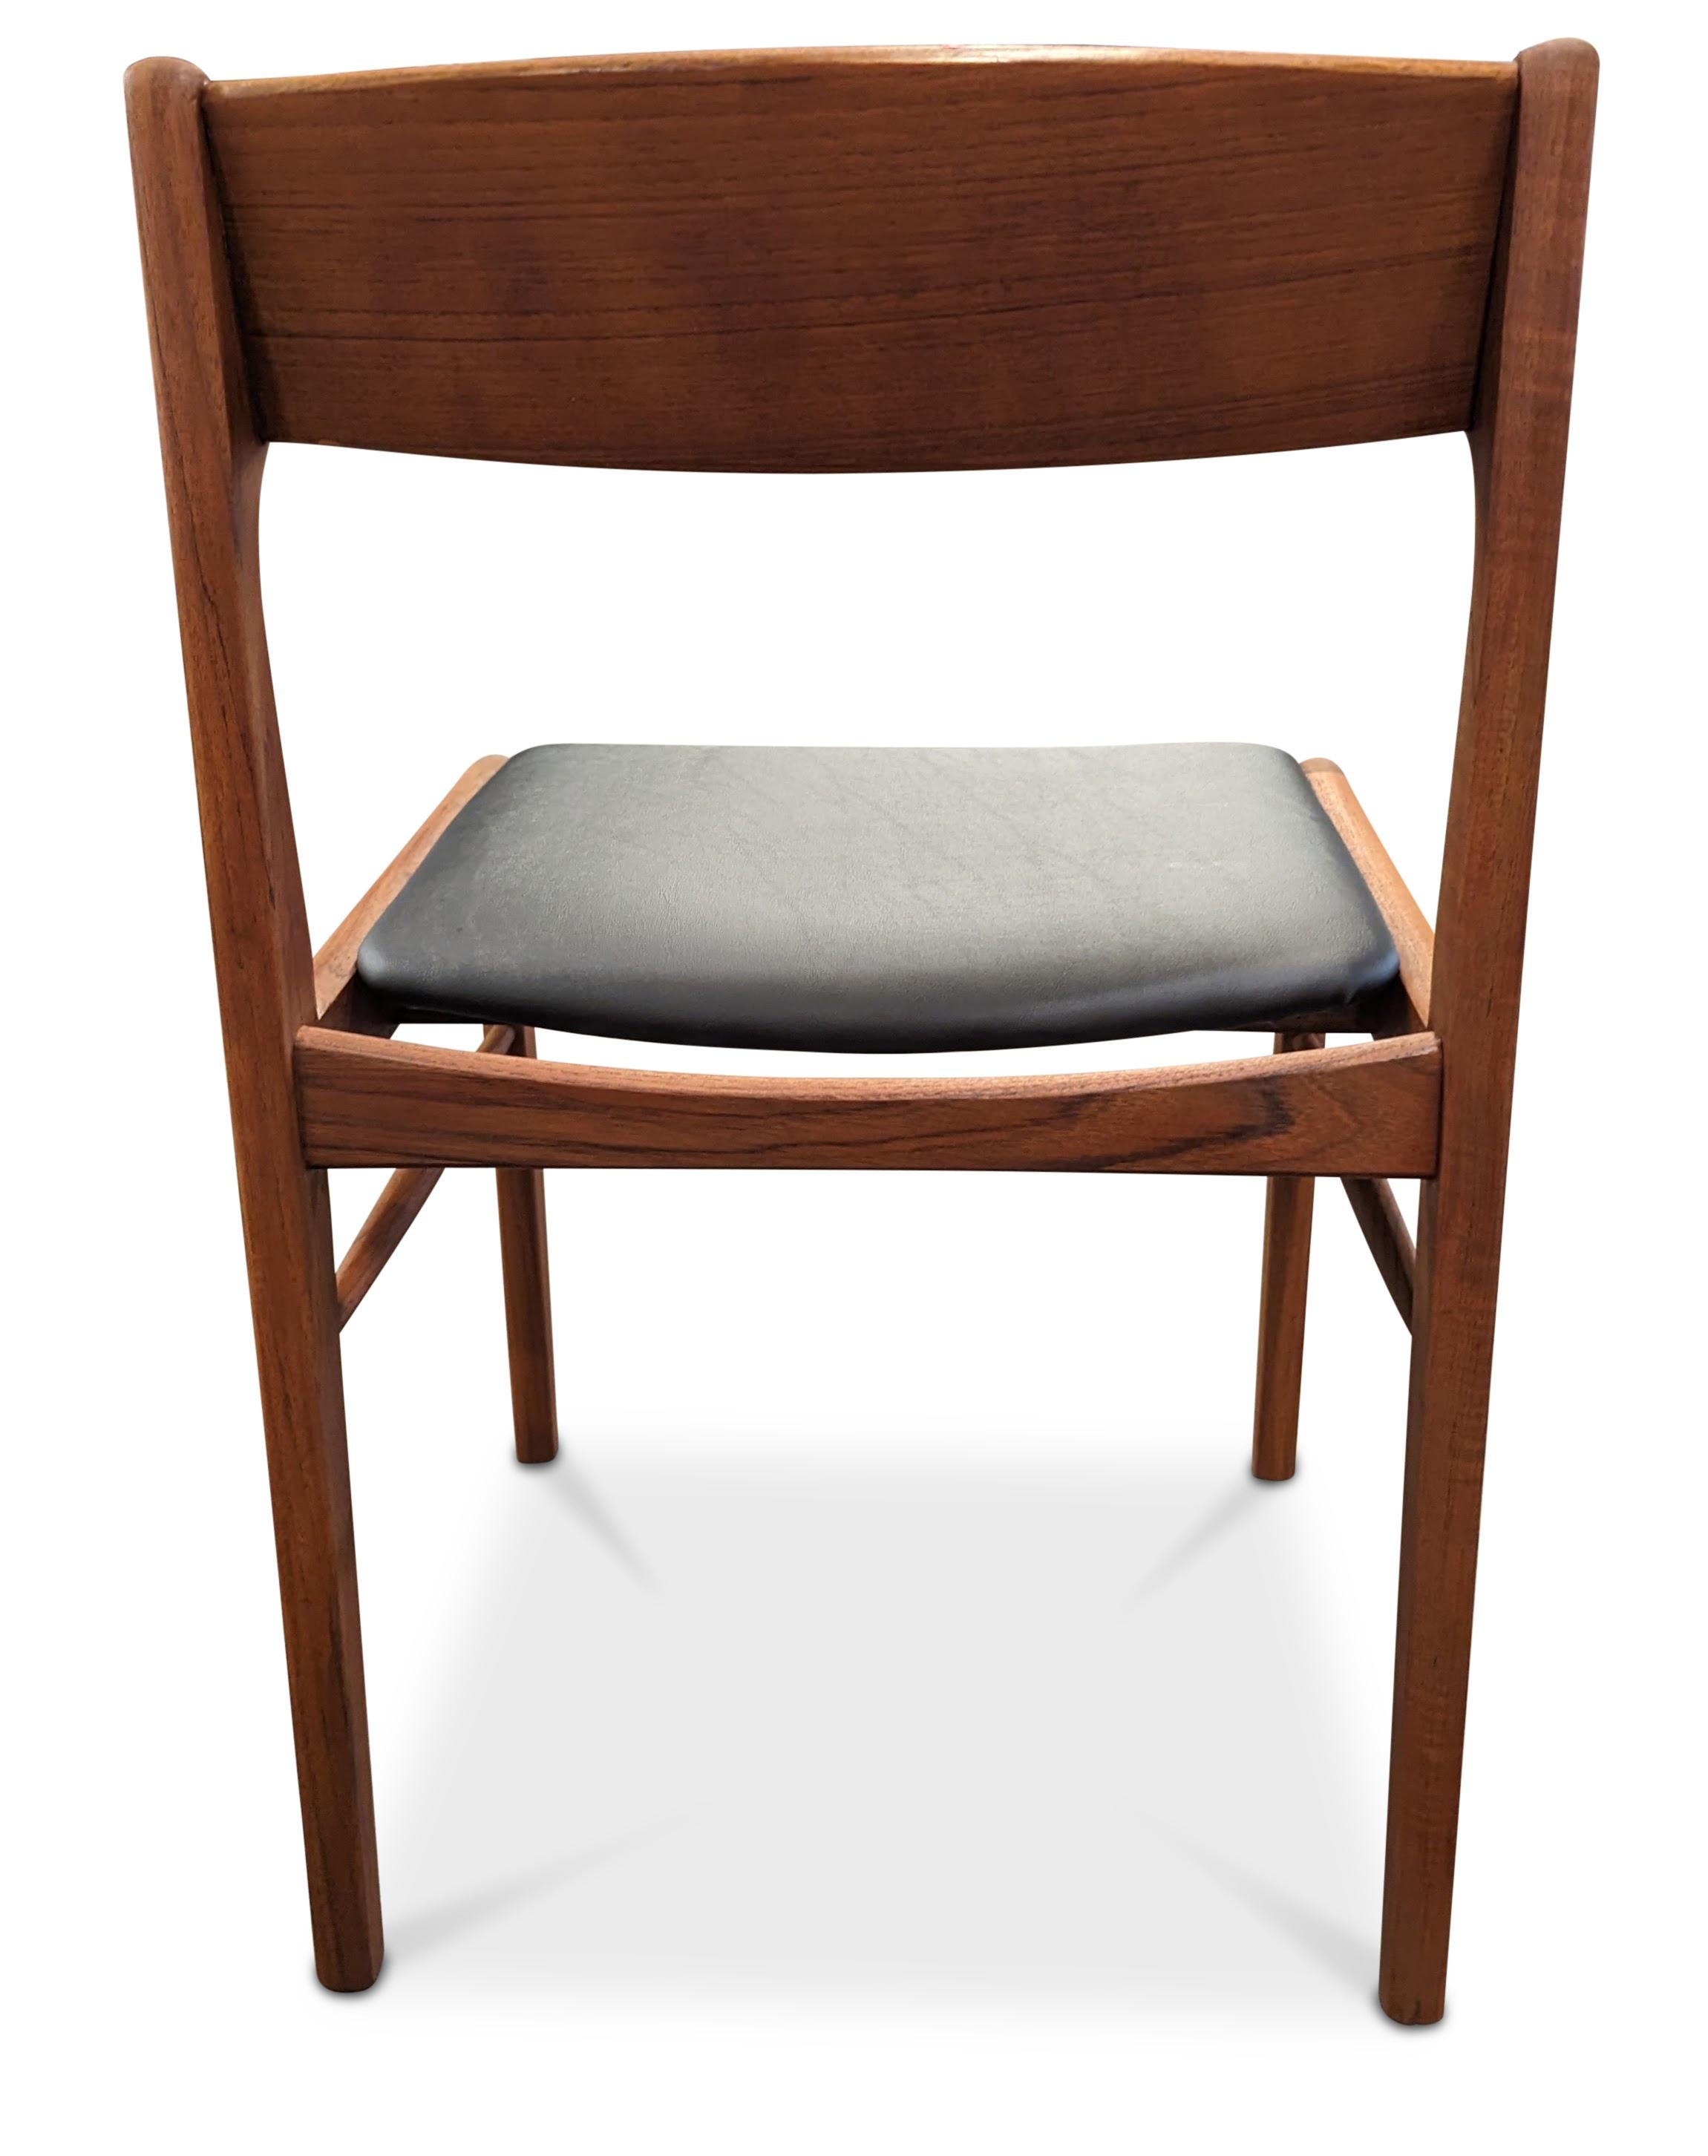 4 Vintage Danish Mid Century Teak Dining Chairs - 072307 1